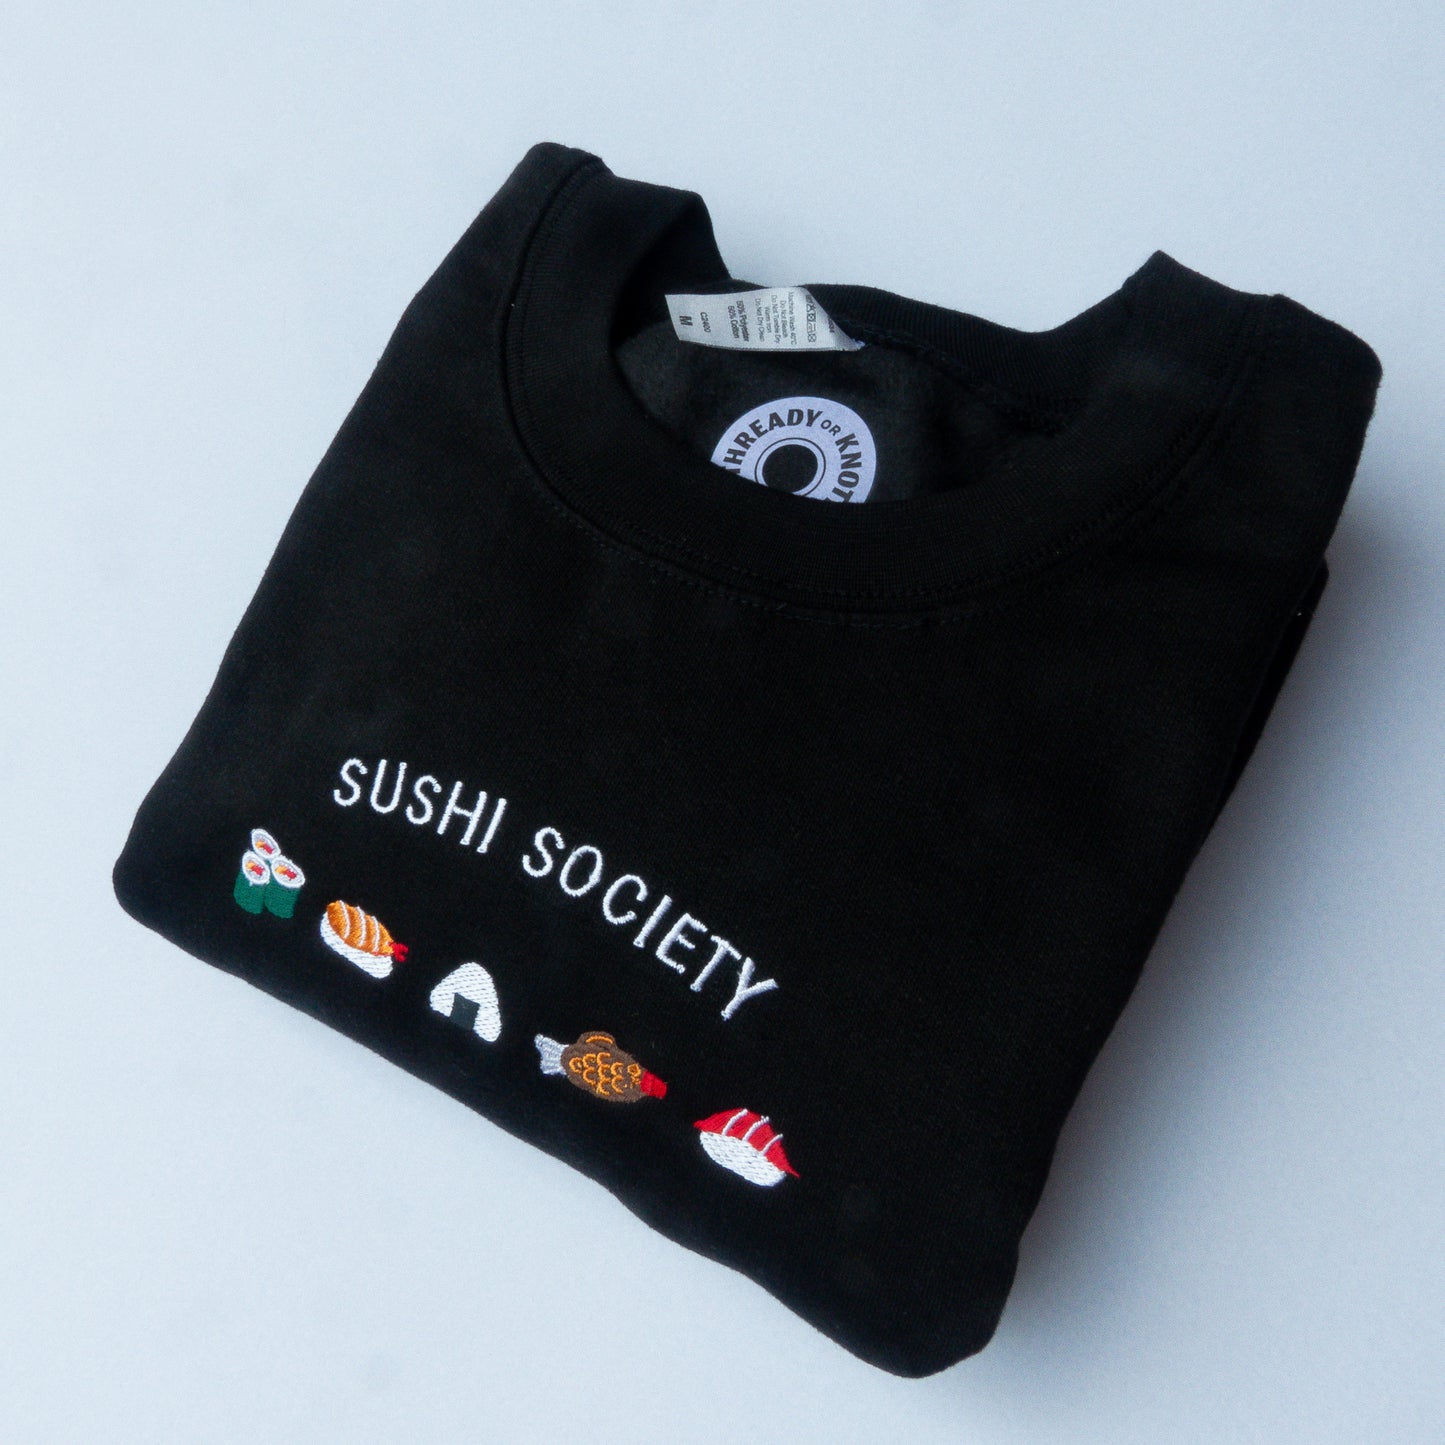 Sushi Society Embroidered Crewneck Sweatshirt